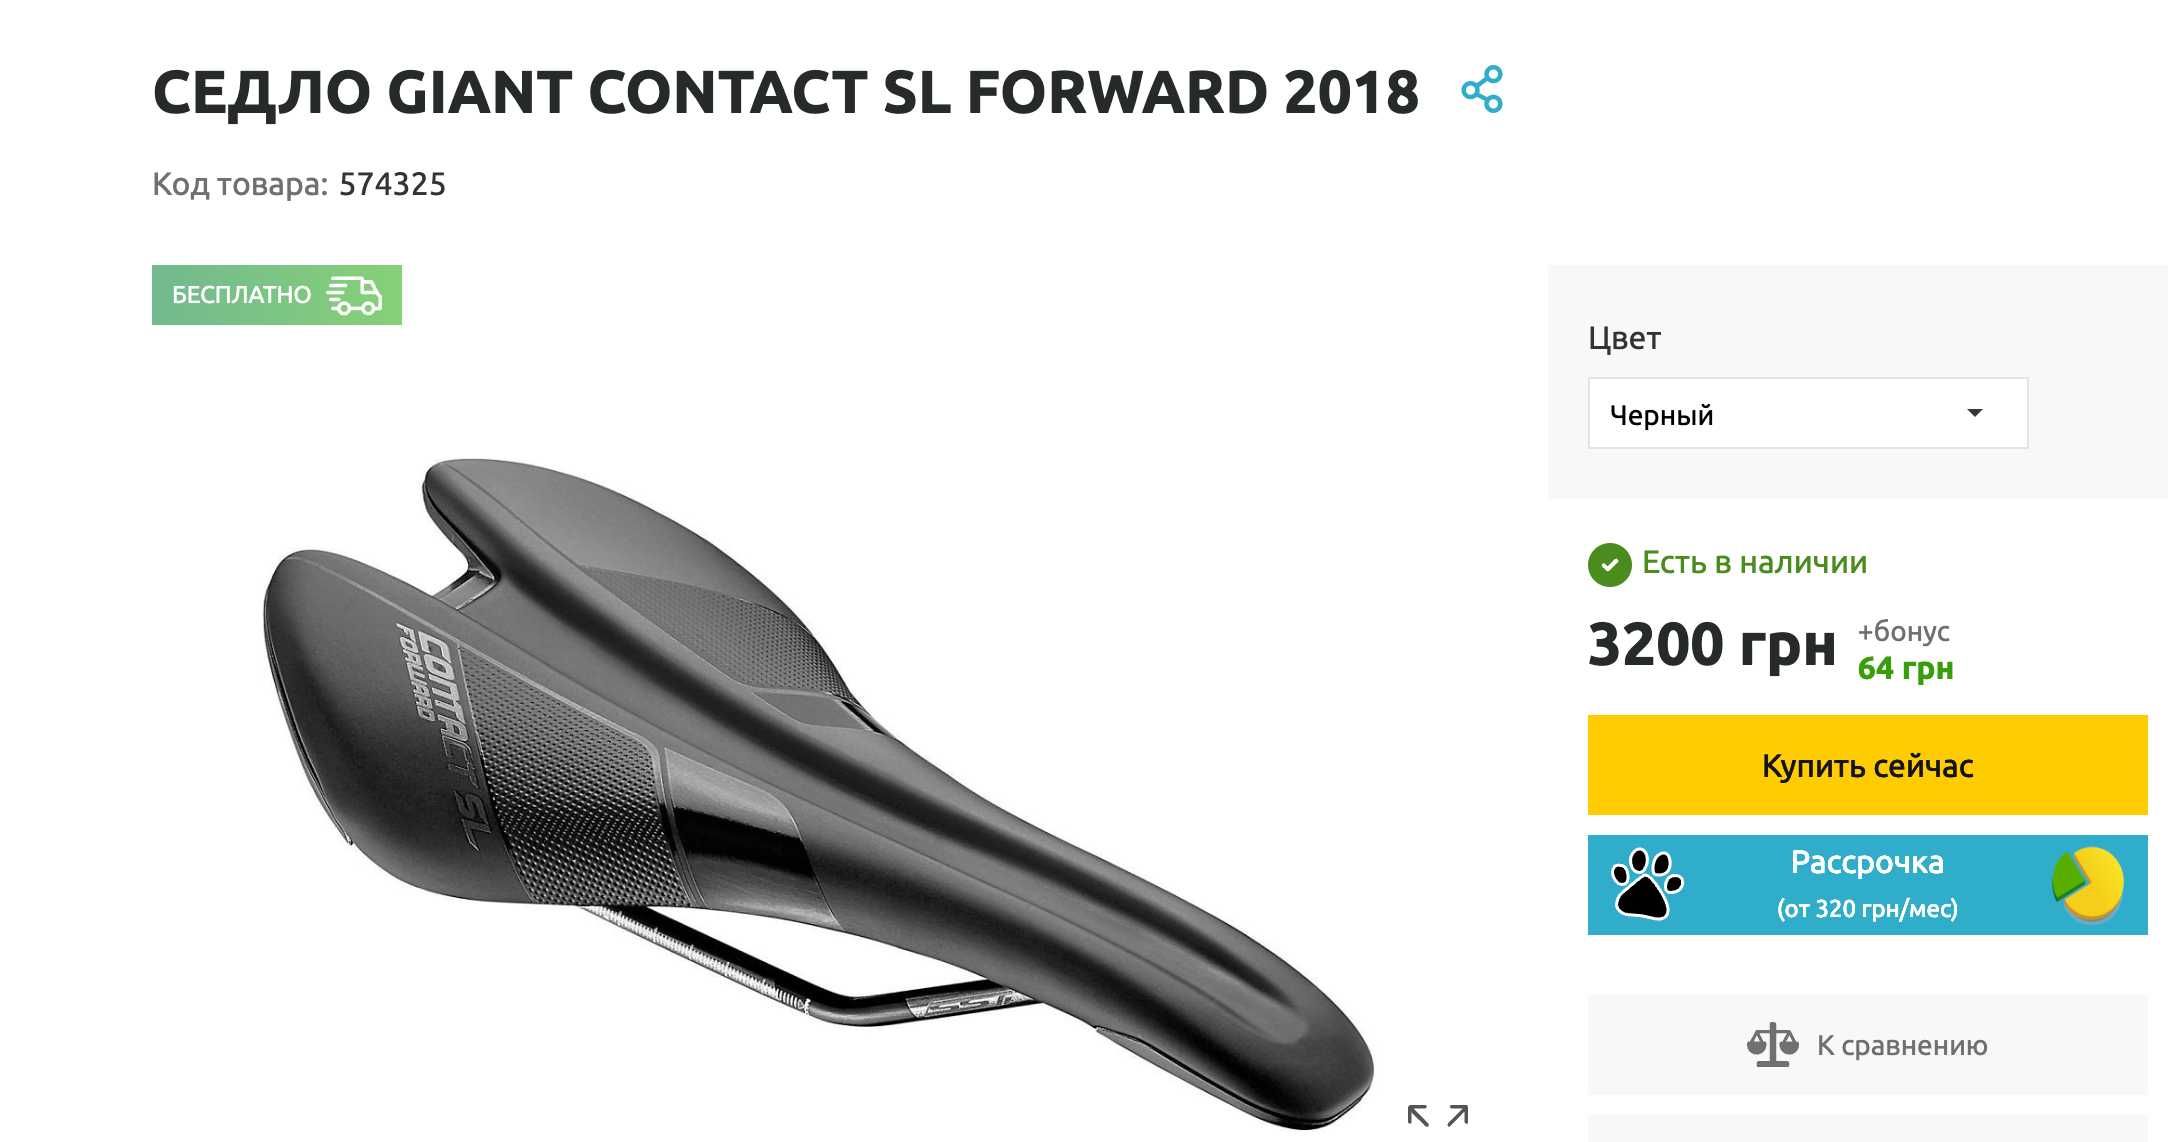 Сідло Giant Contact Forward (Giant Propel Advanced), 130мм